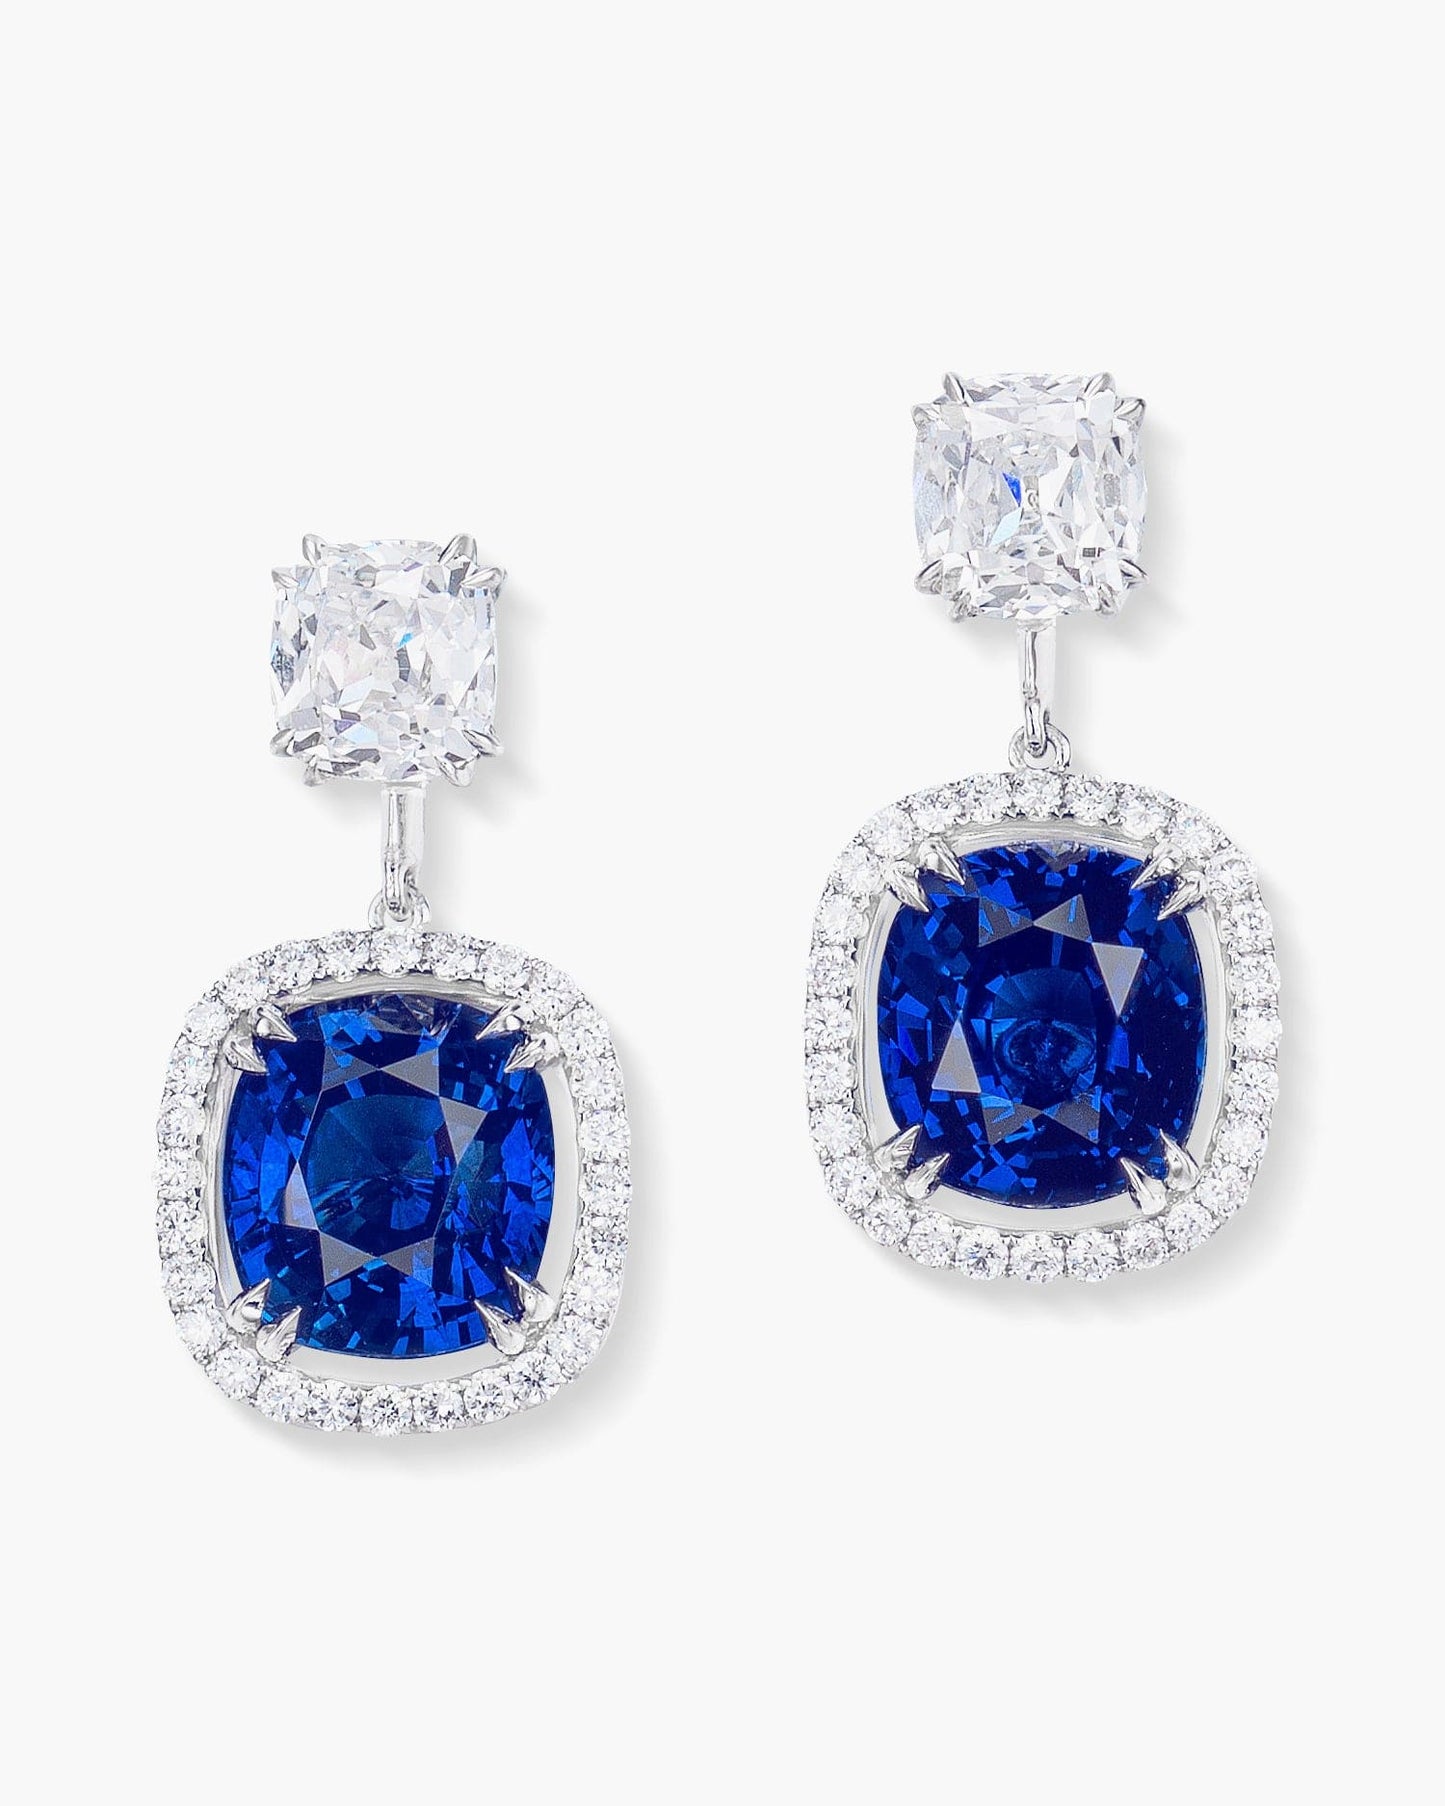 6.11 carat Cushion Cut Ceylon Sapphire and Diamond Earrings